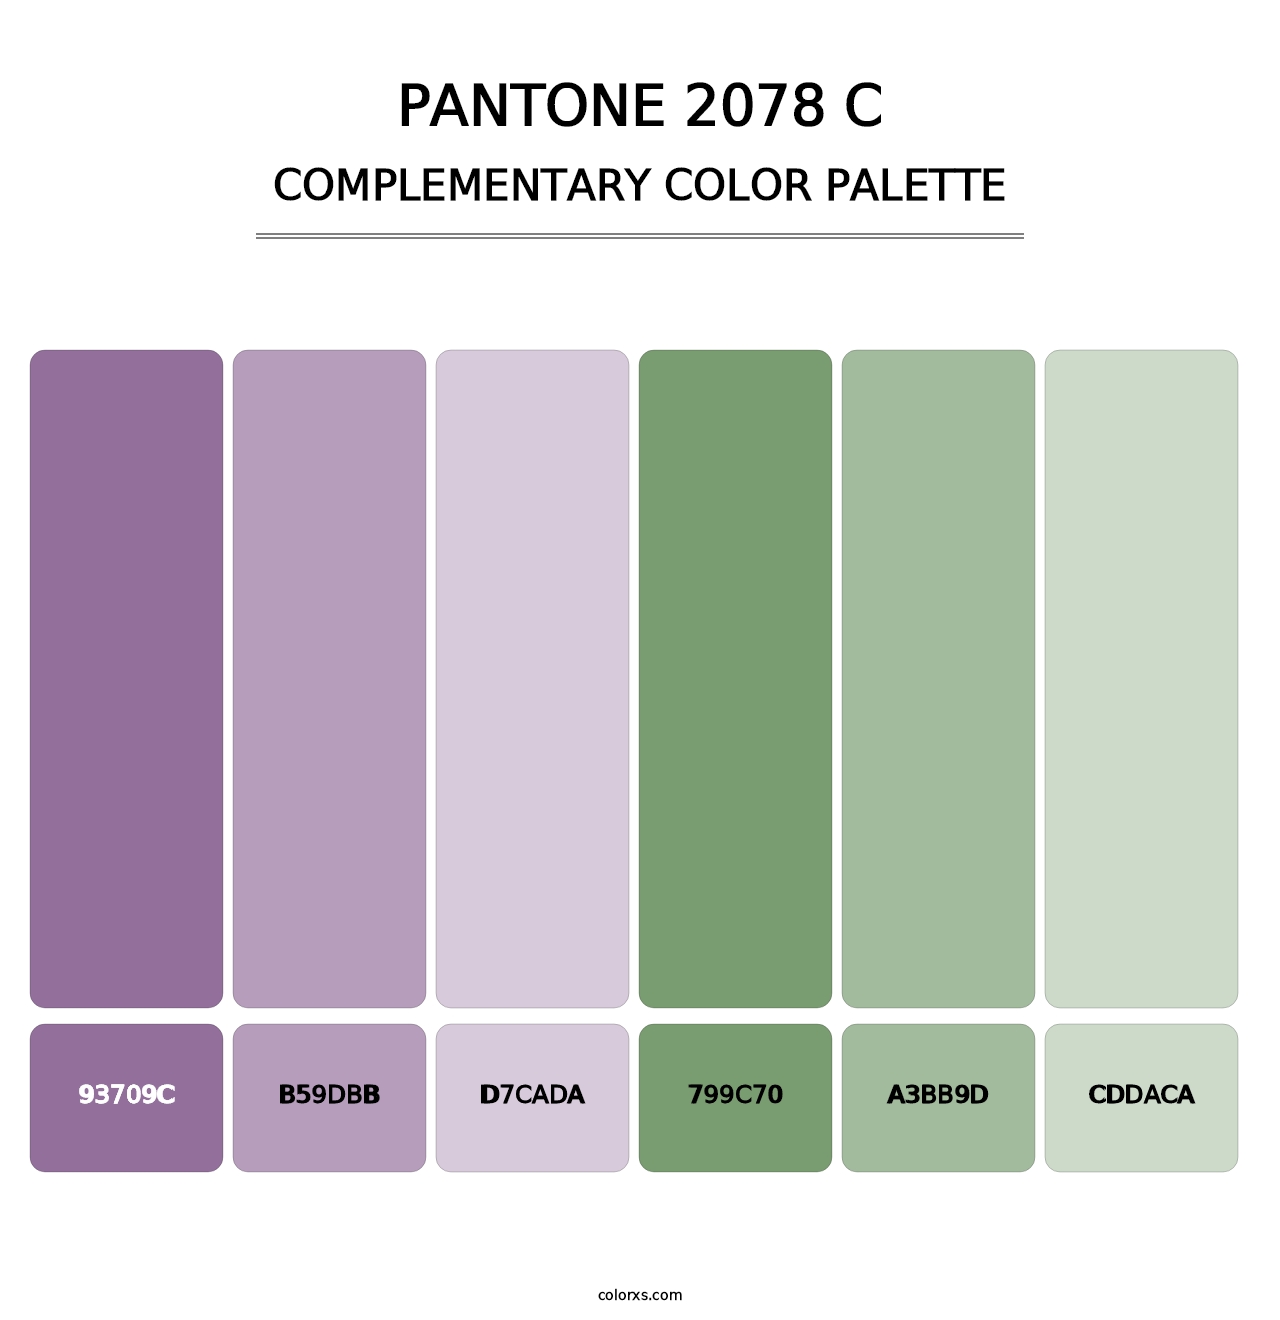 PANTONE 2078 C - Complementary Color Palette